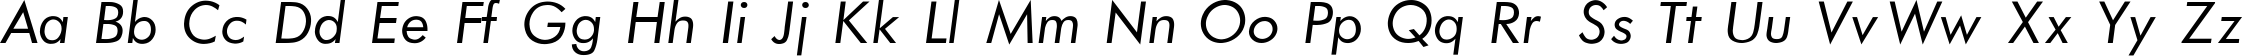 Пример написания английского алфавита шрифтом Futura_Book-Normal-Italic